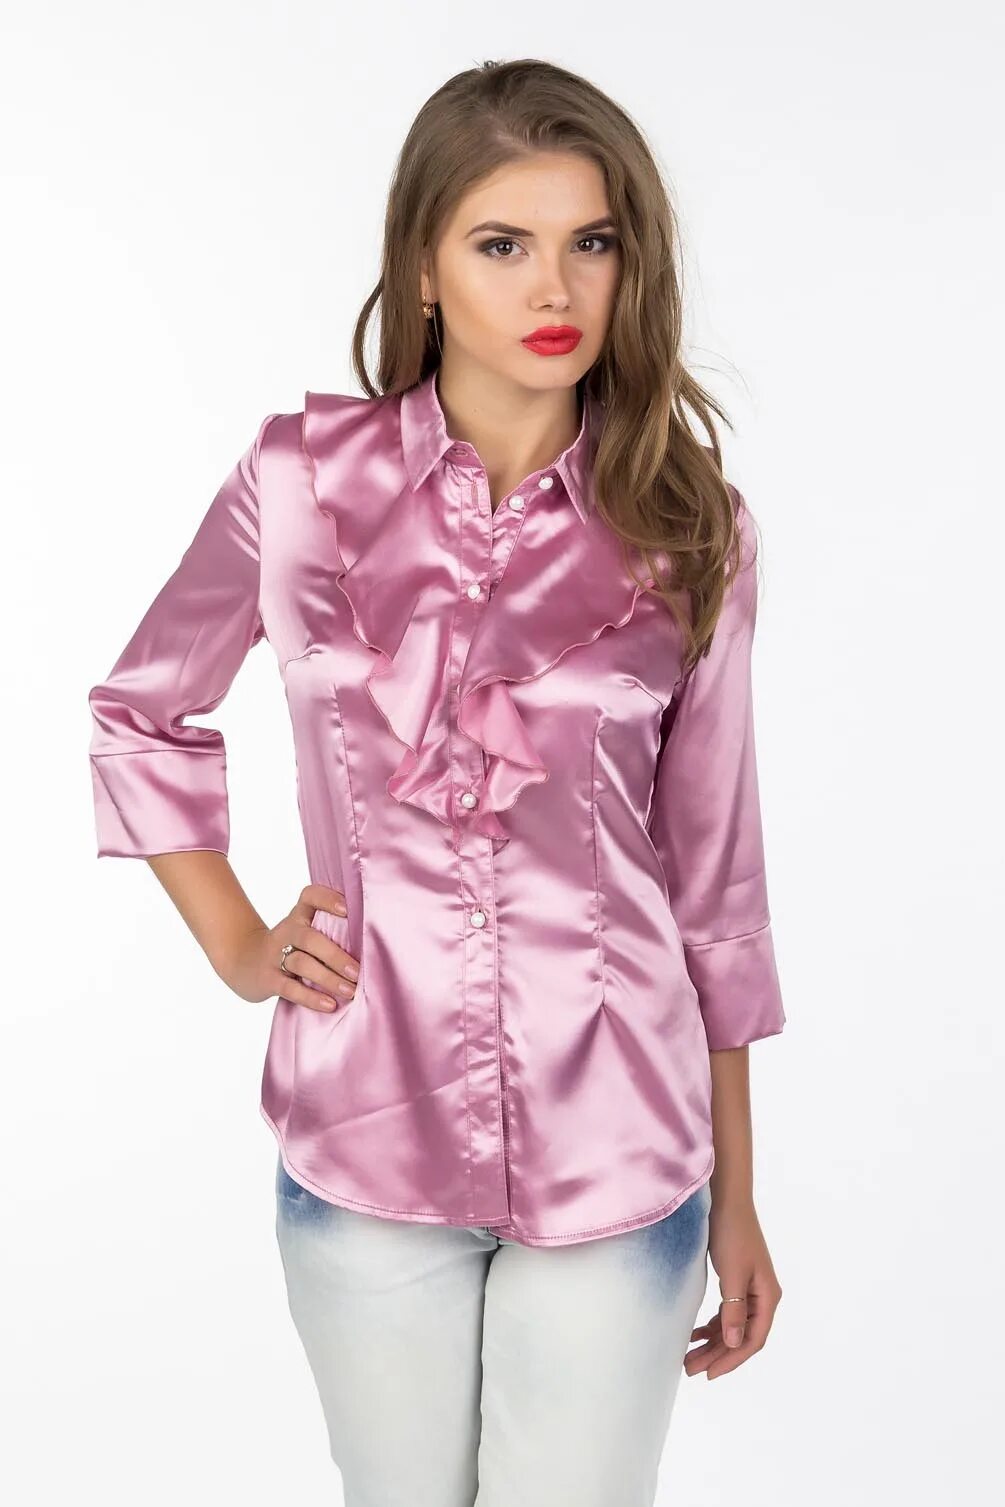 Блузки из атласа. Блуза ЛП-22180. Атласная блузка. Блузка женская атласная. Шелковая блузка.